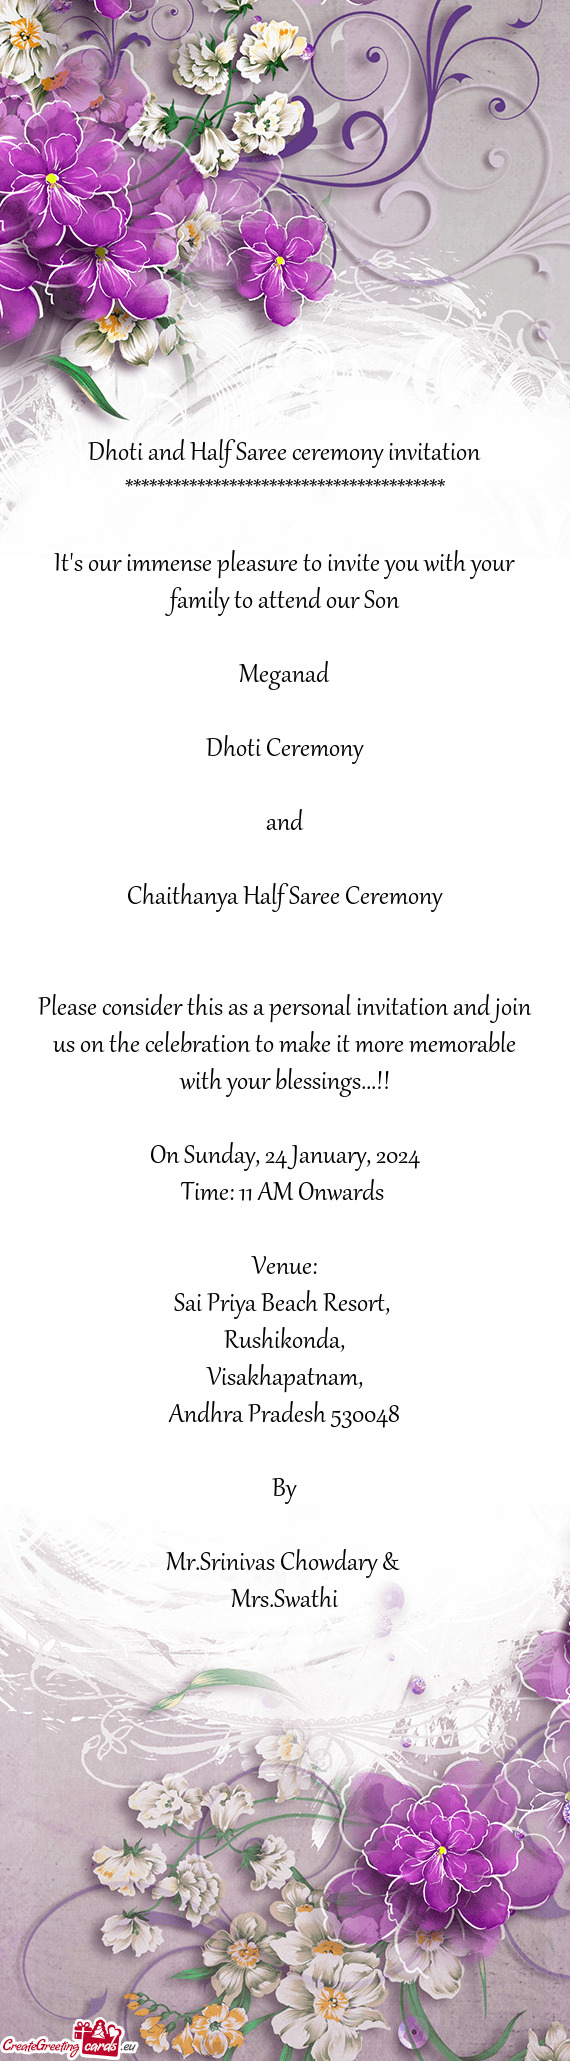 Chaithanya Half Saree Ceremony